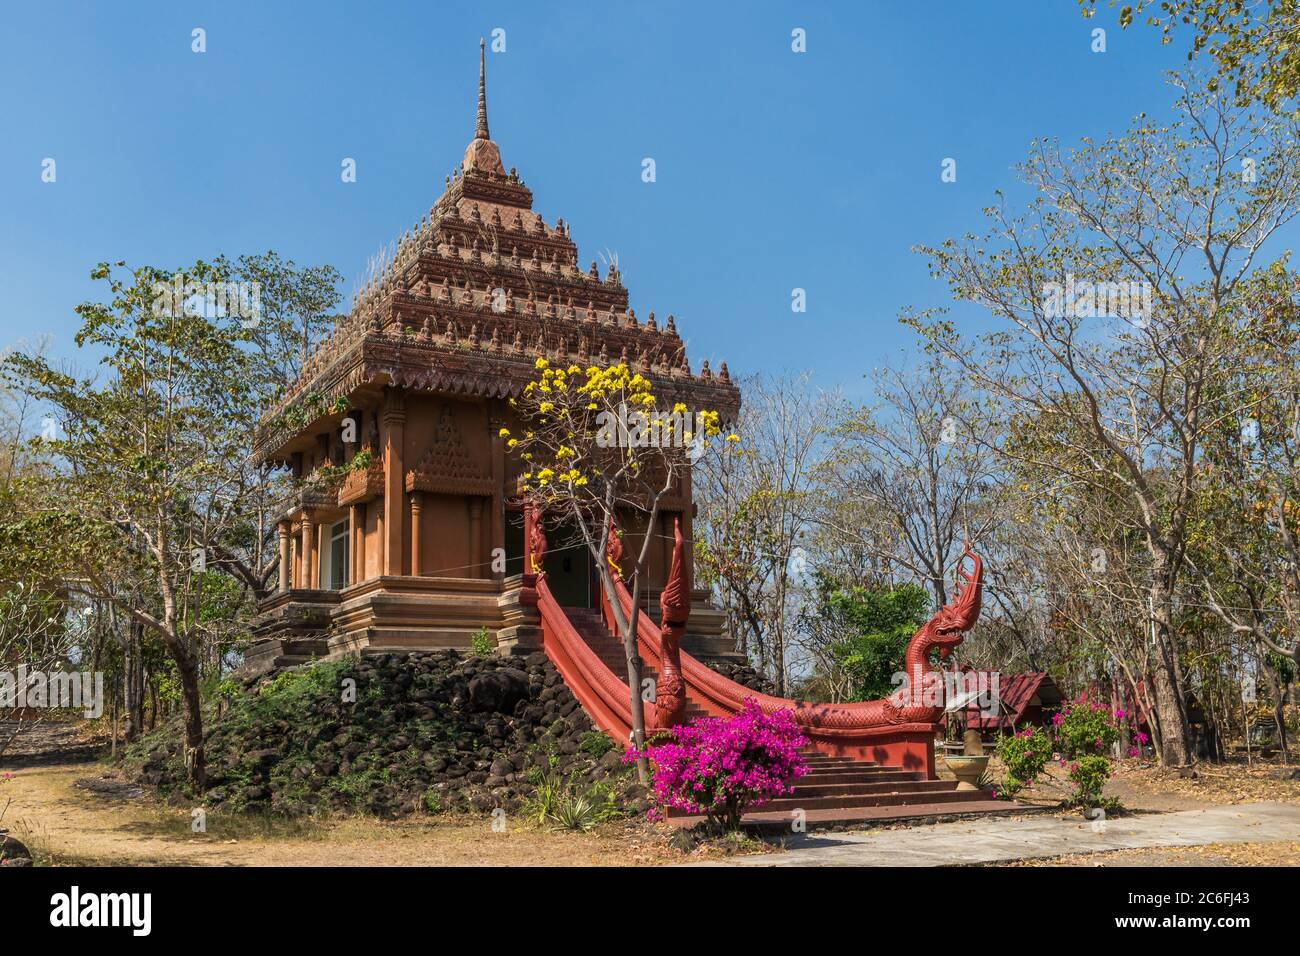 Am Khao Phra Angkhan Tempel. Das Hotel liegt in der Provinz Thailand Buriram der Tempel wurde auf dem ehemaligen Vulkan Khao Loy gebaut. Stockfoto